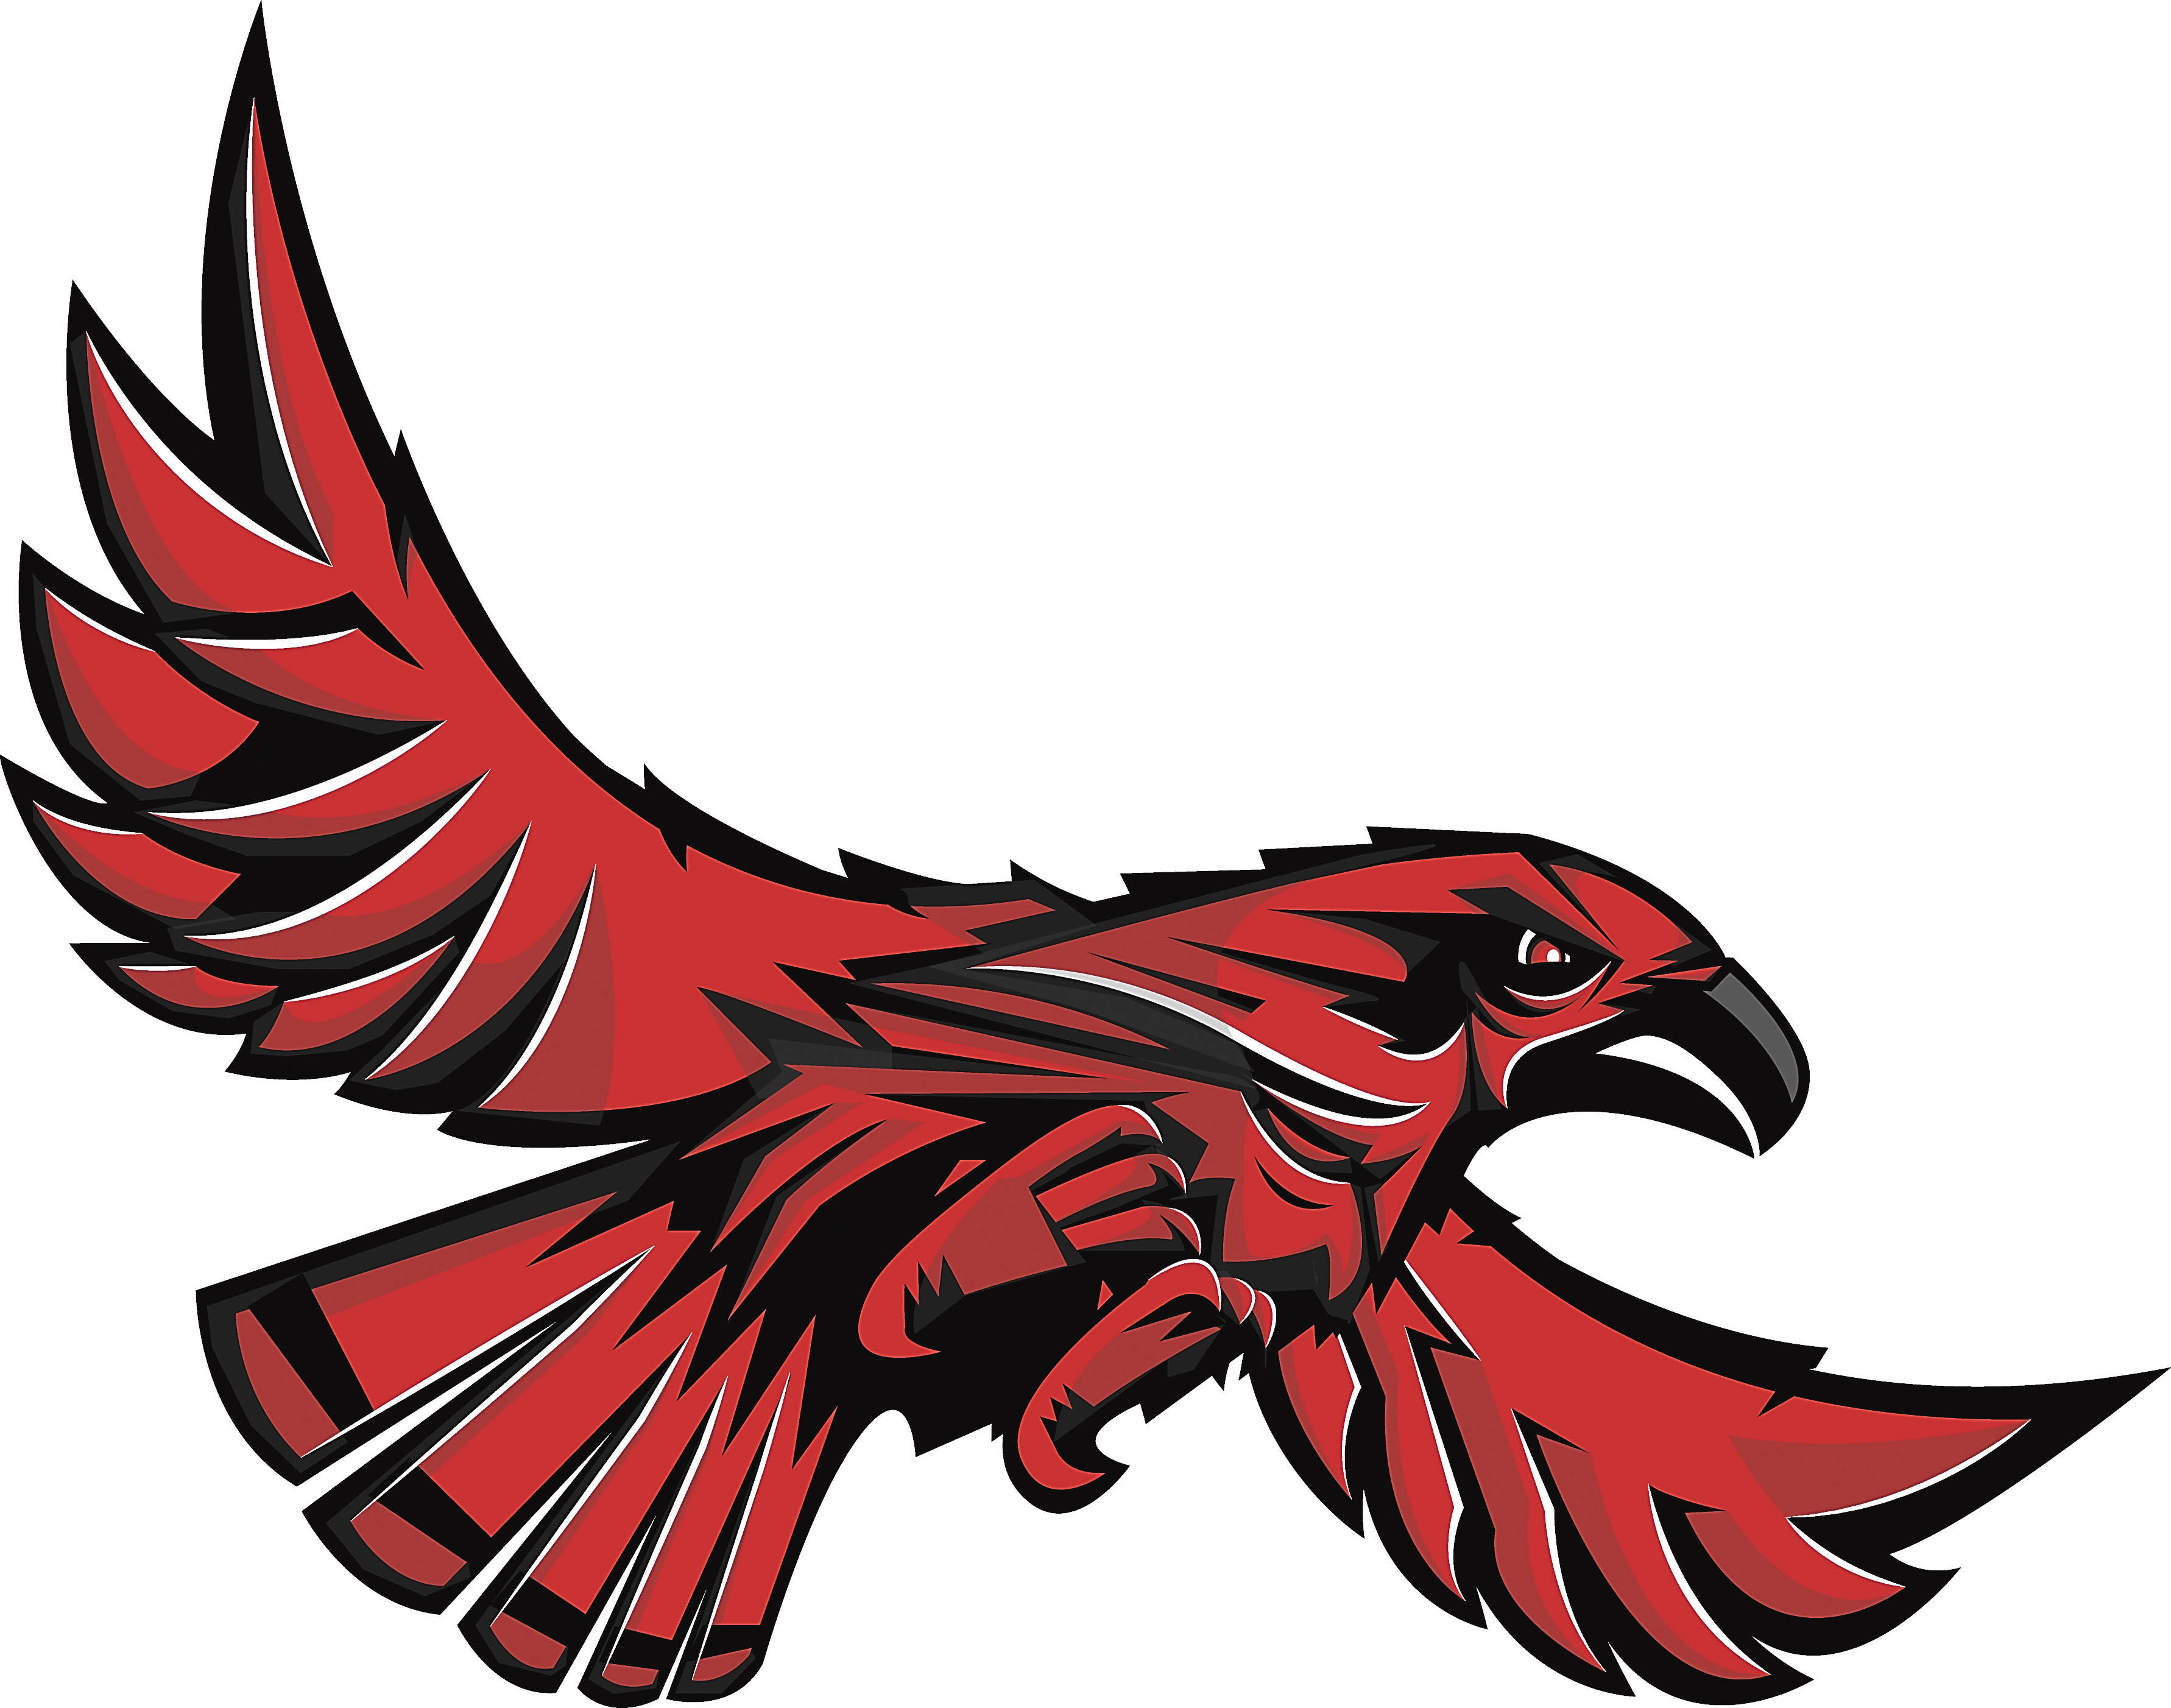 Port Townsend High School's new Redhawks logo